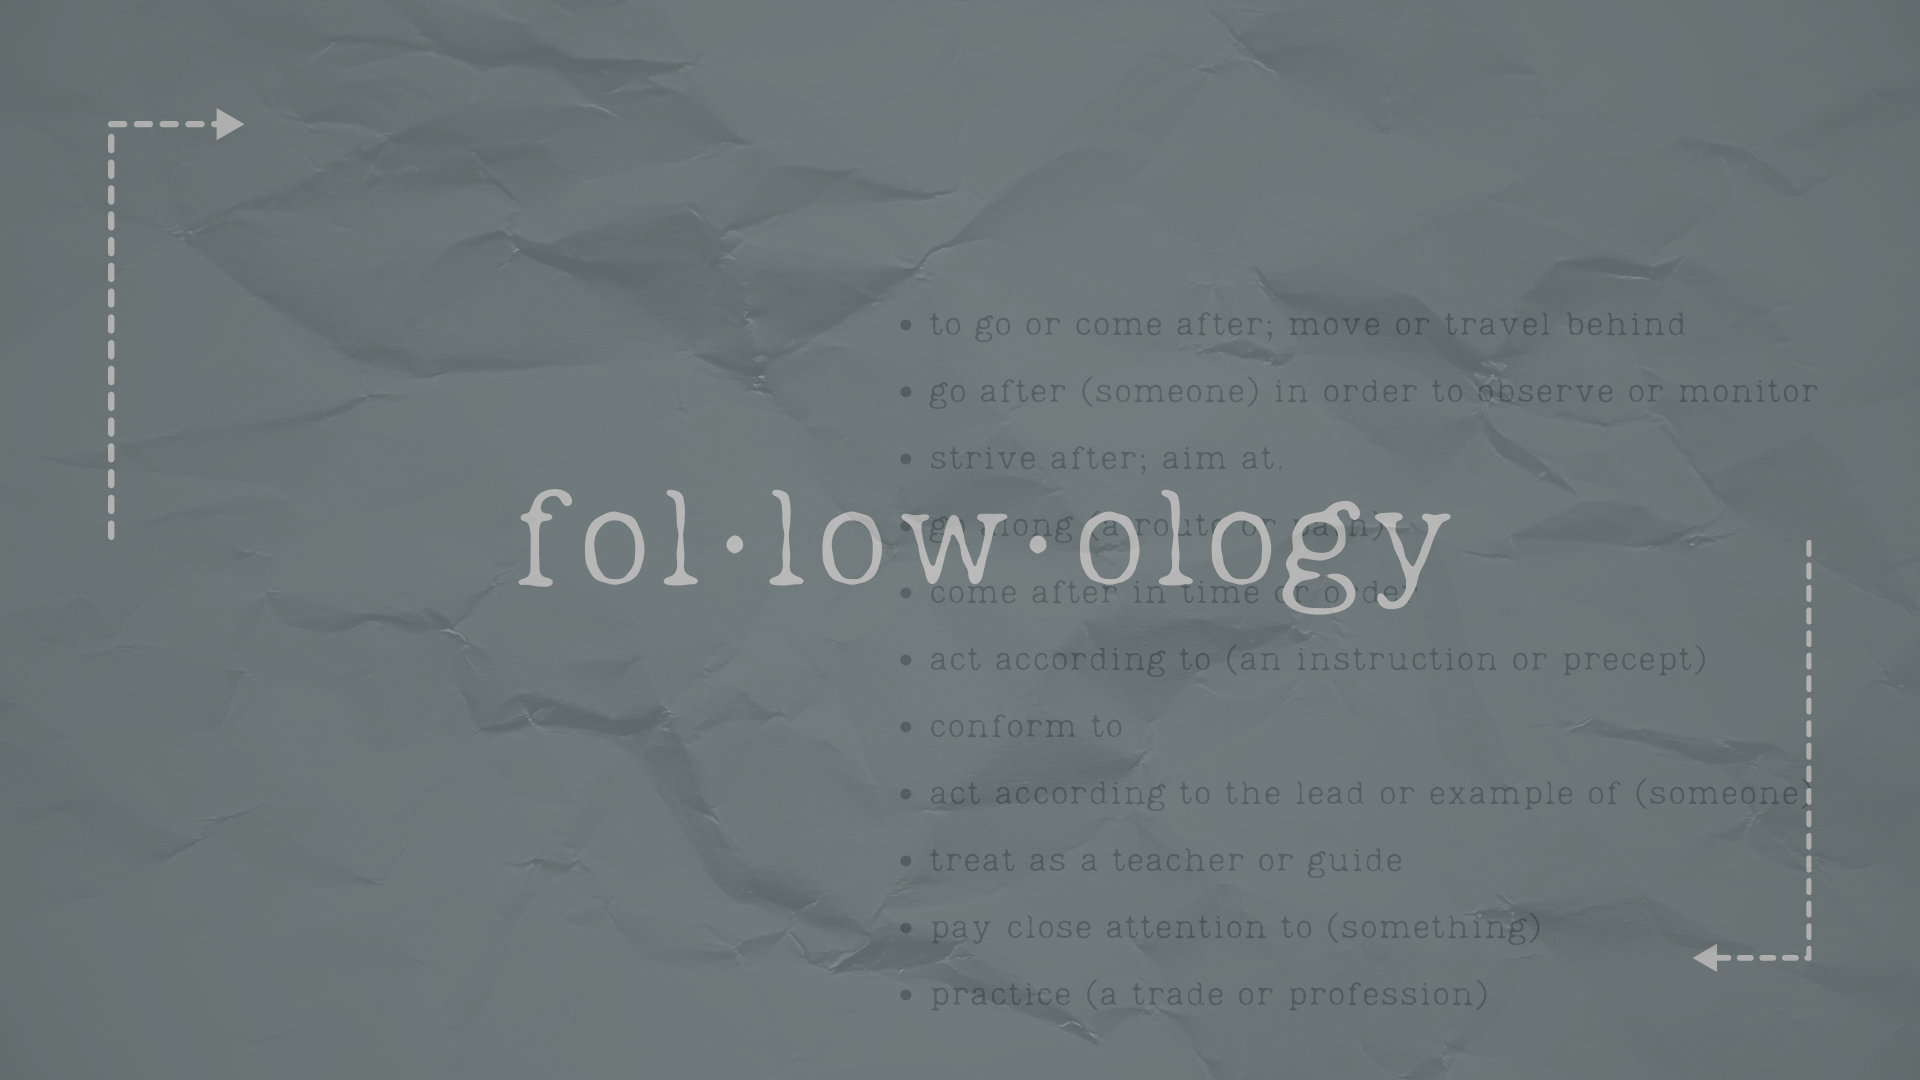 Followology: Great Expectations